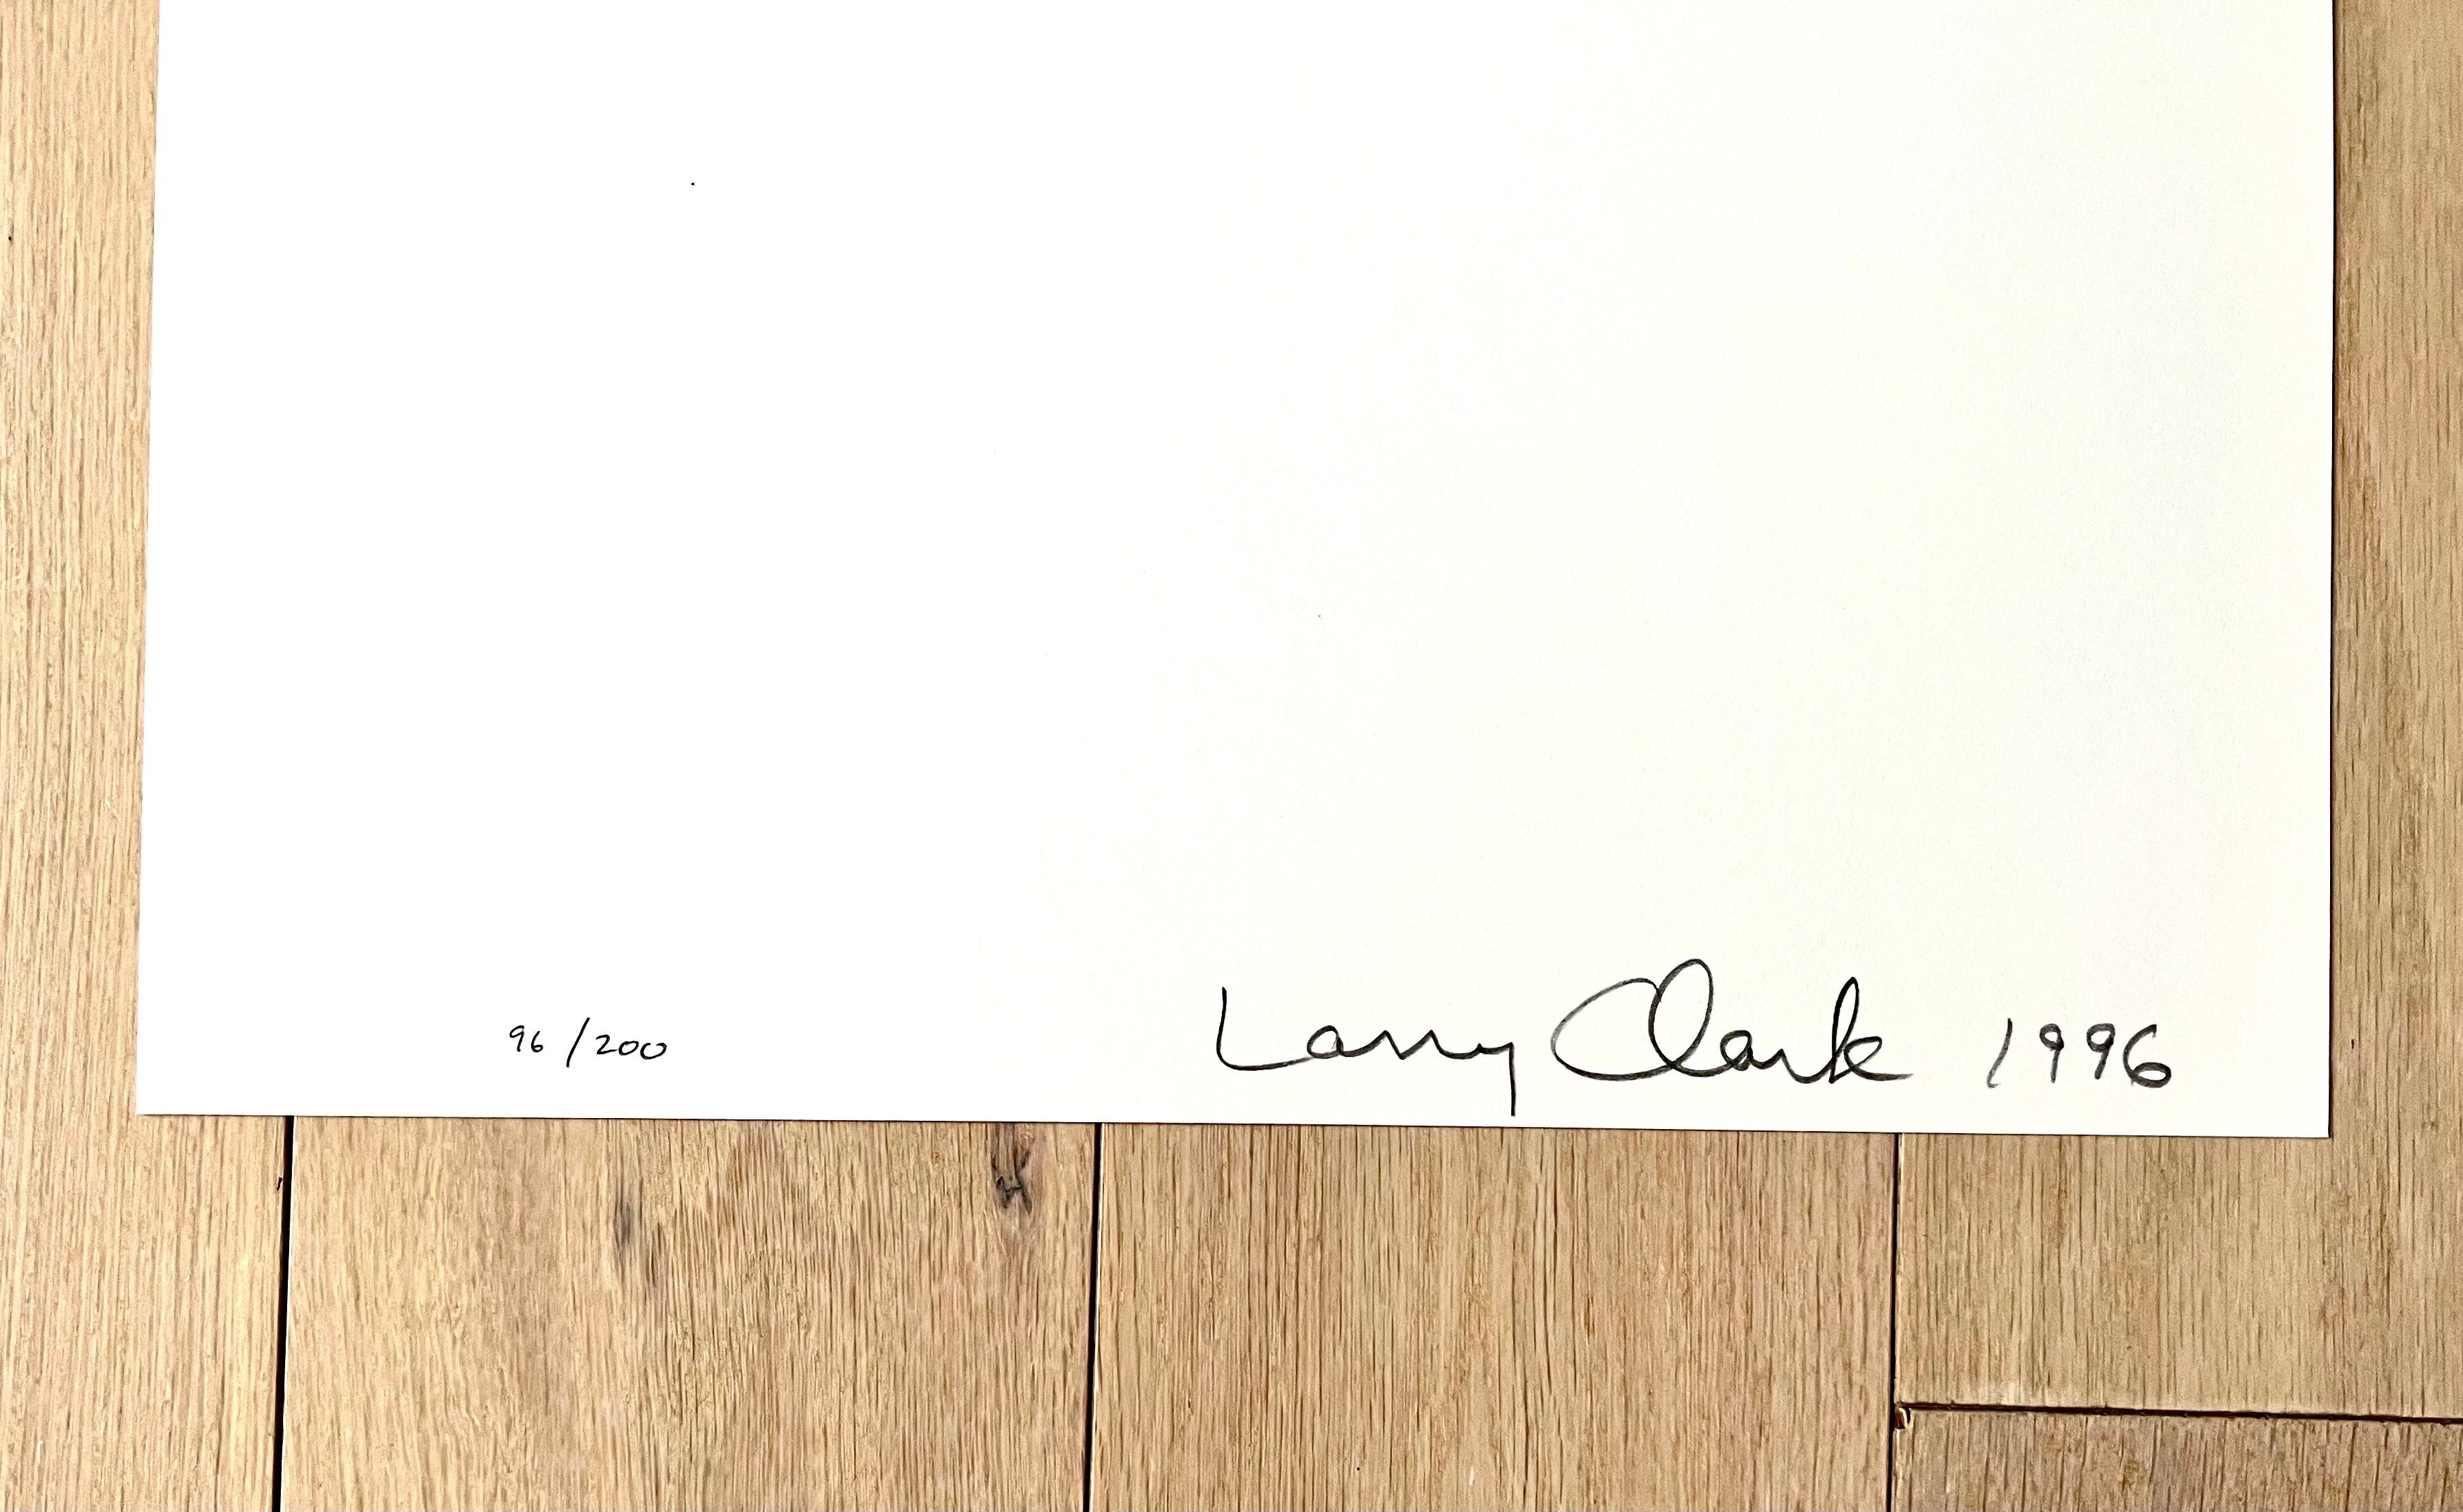 Larry Clark, Untitled (Shorty), 1996/2007